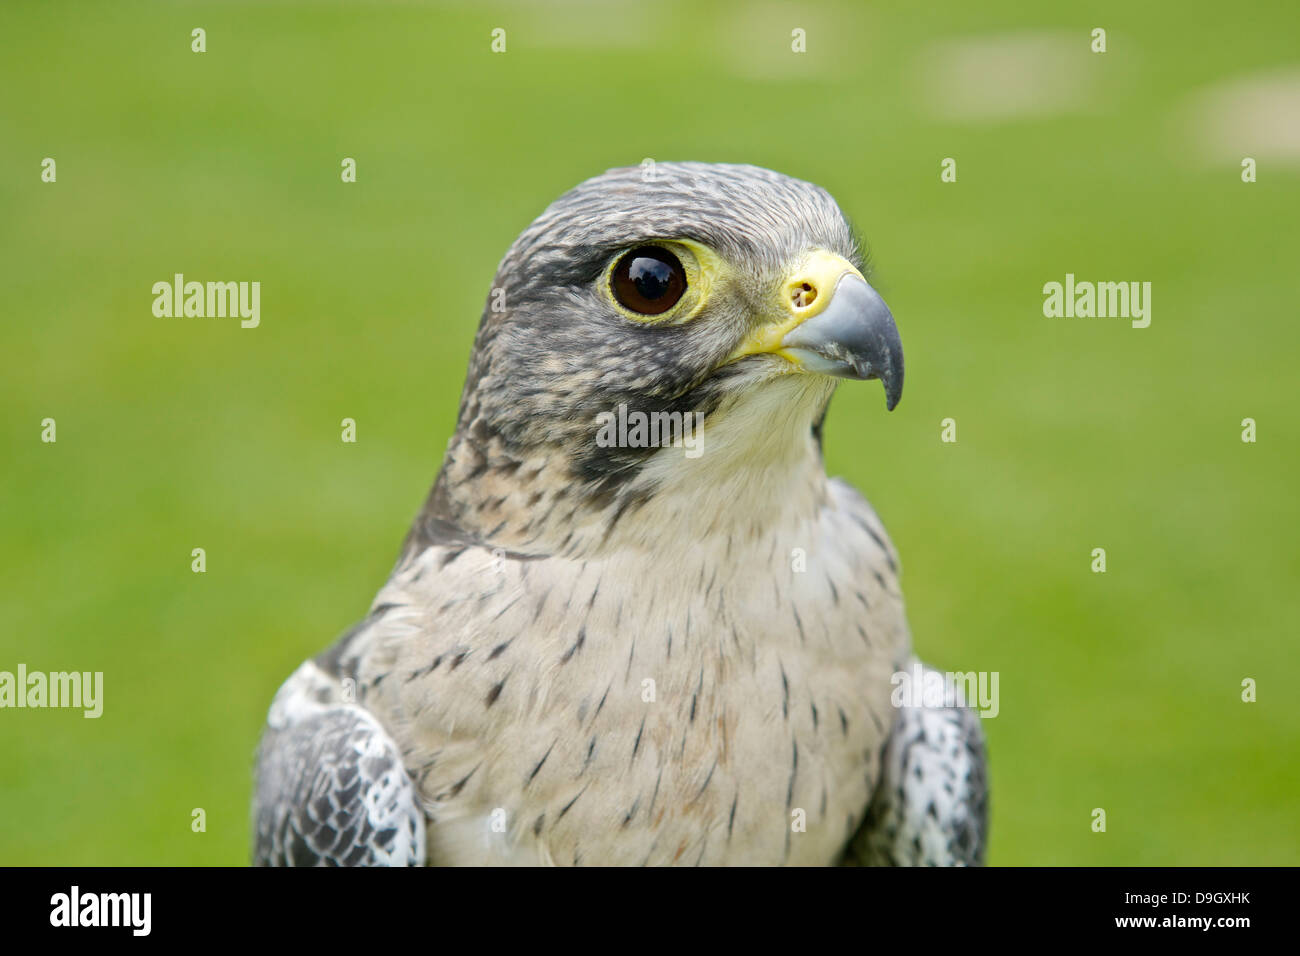 Gyr Peregrin Falcon Hybrid Closeup Headshot Stock Photo